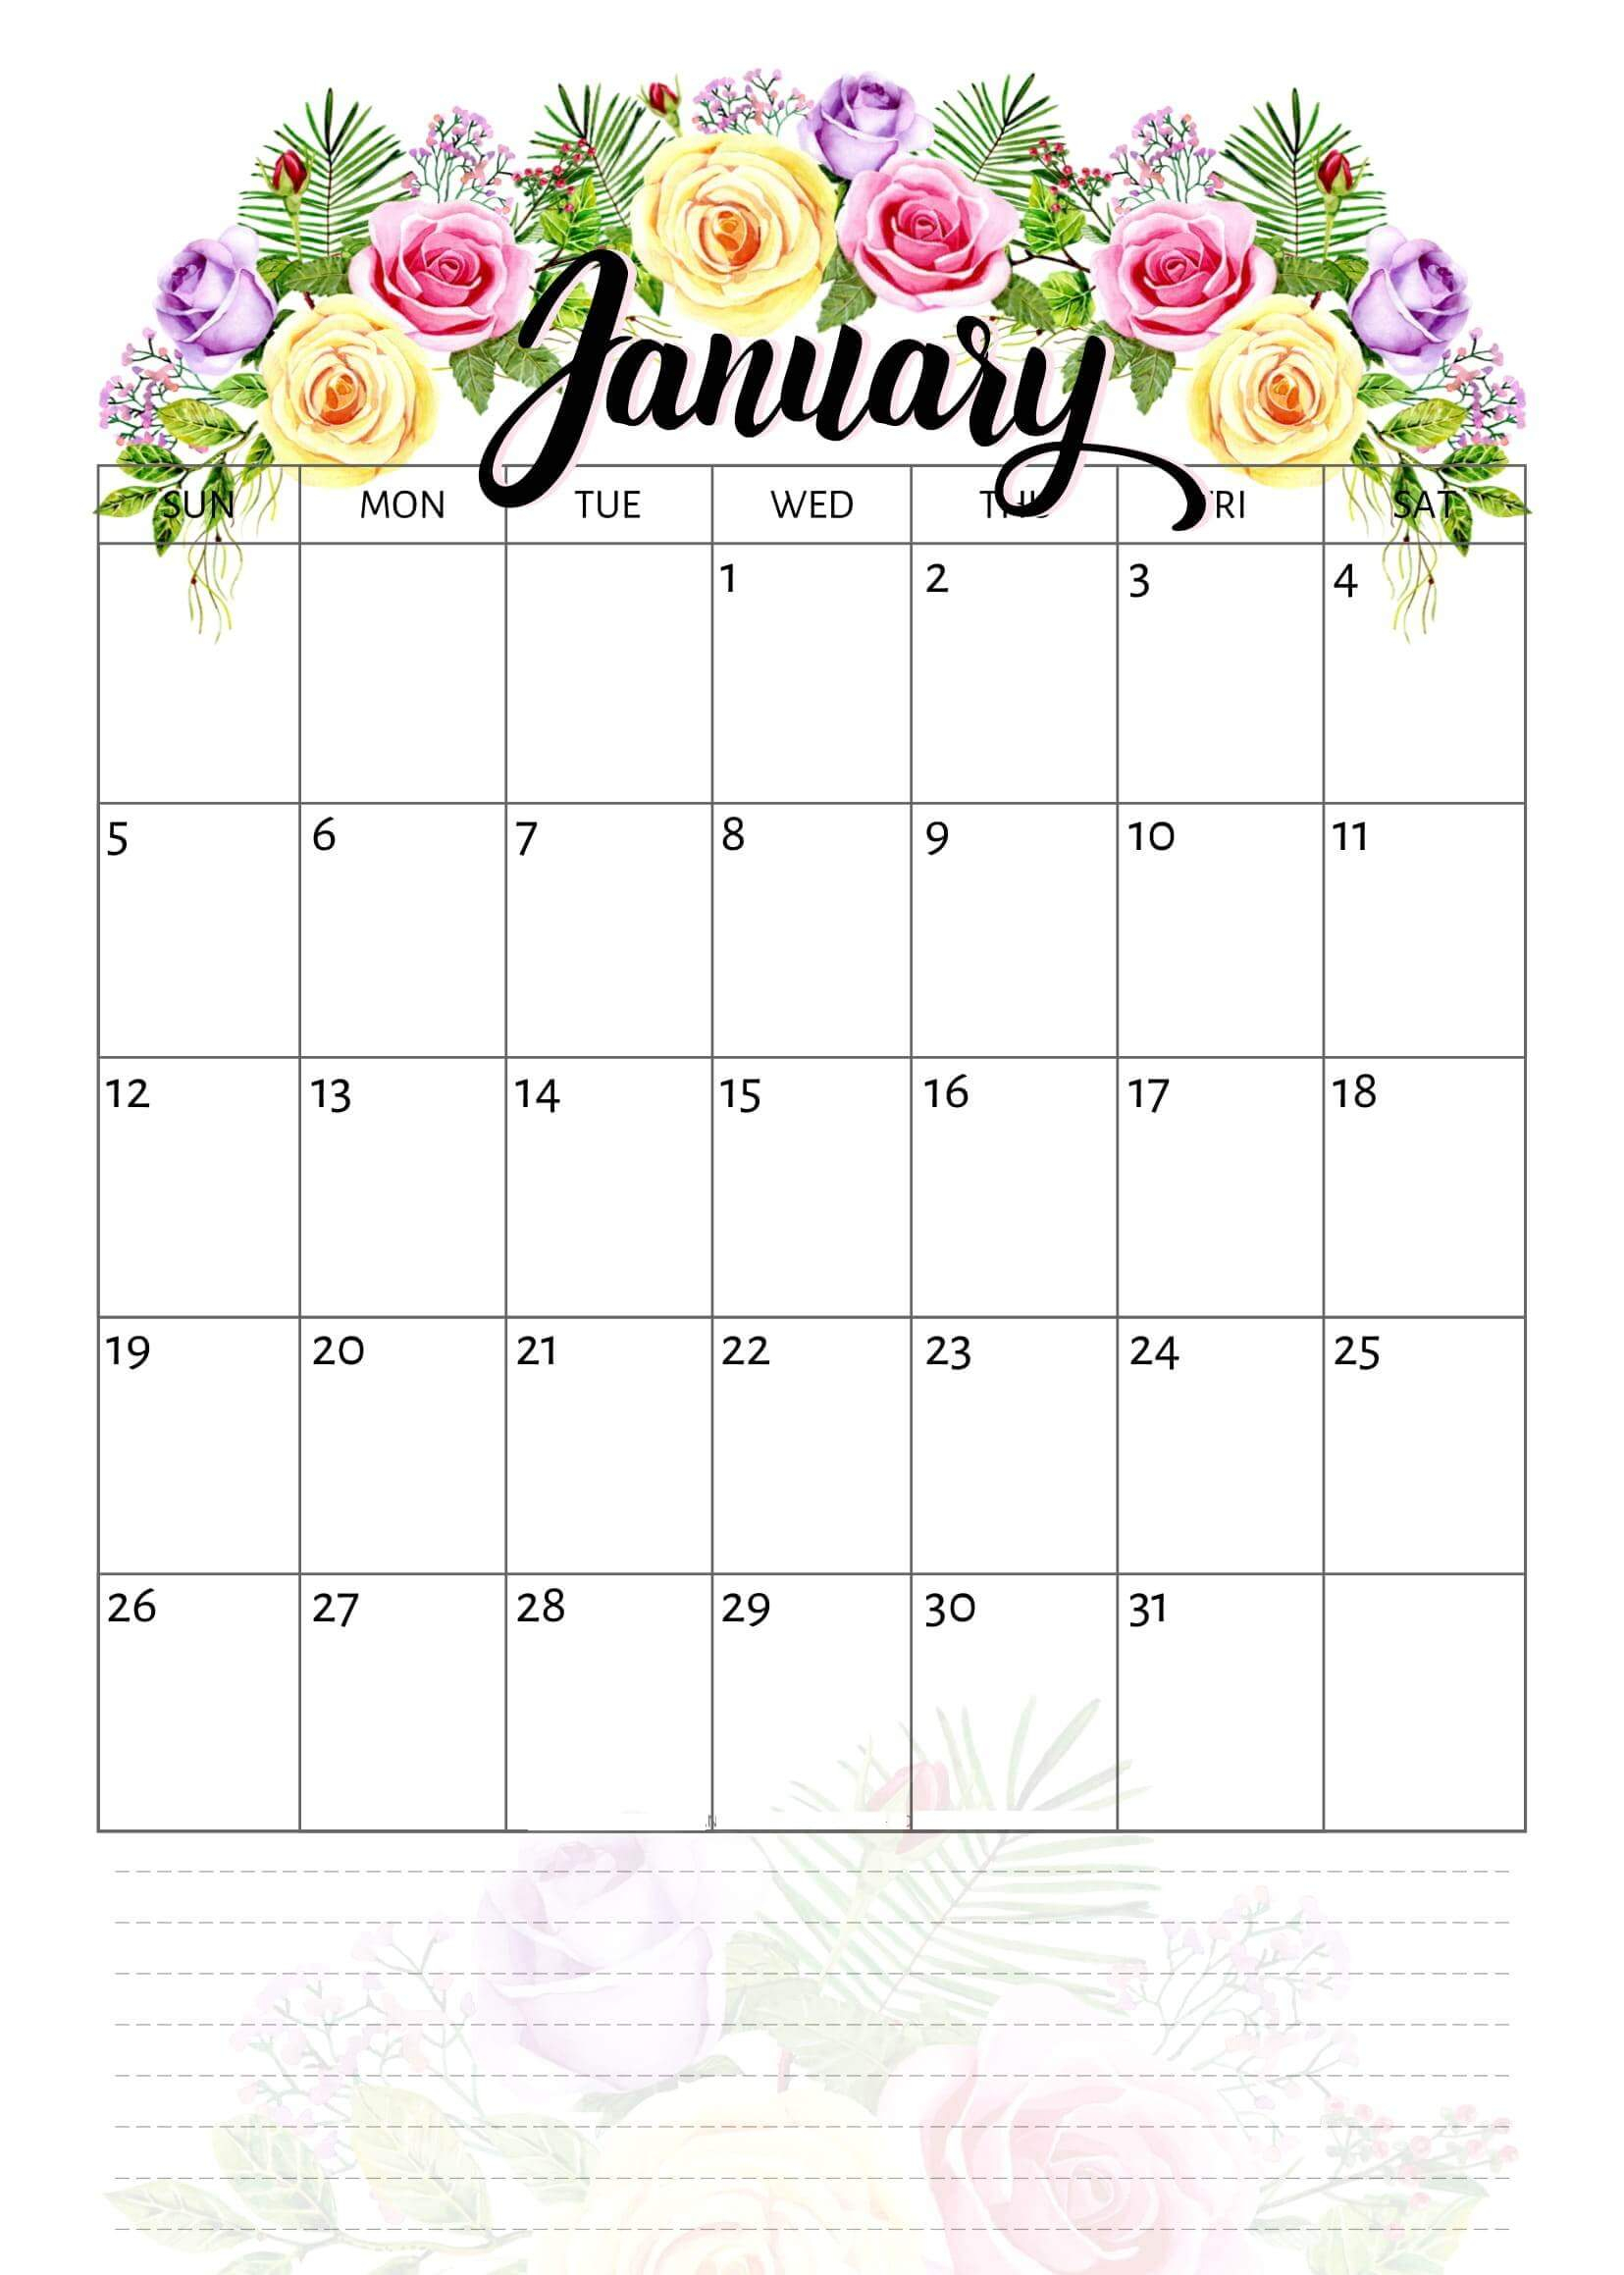 Cute January 2020 Calendar For Kids - 2019 Calendars For